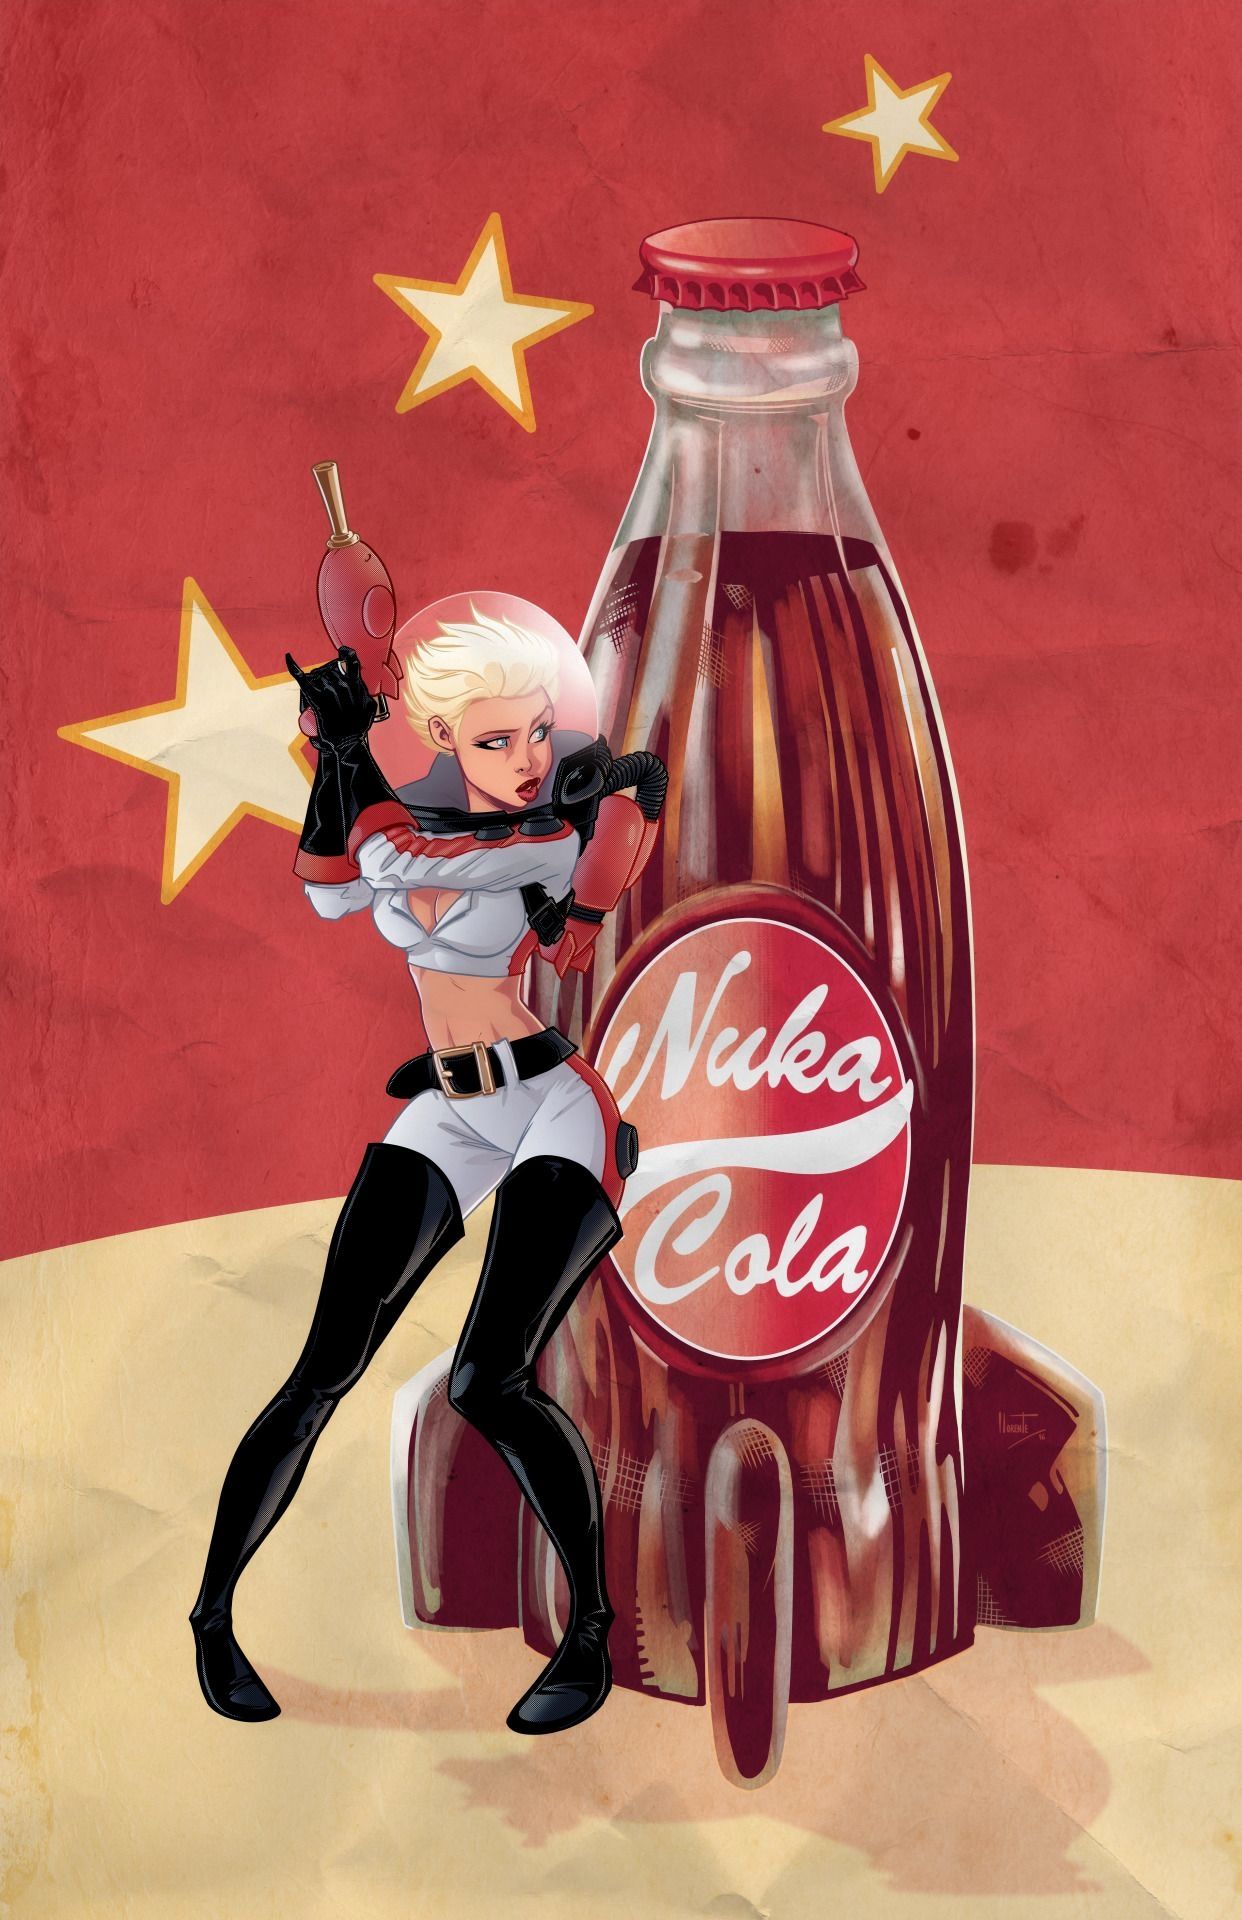 Nuka Cola Girl Wallpaper Awesome Nuka Cola Girl Combination of The Hudson